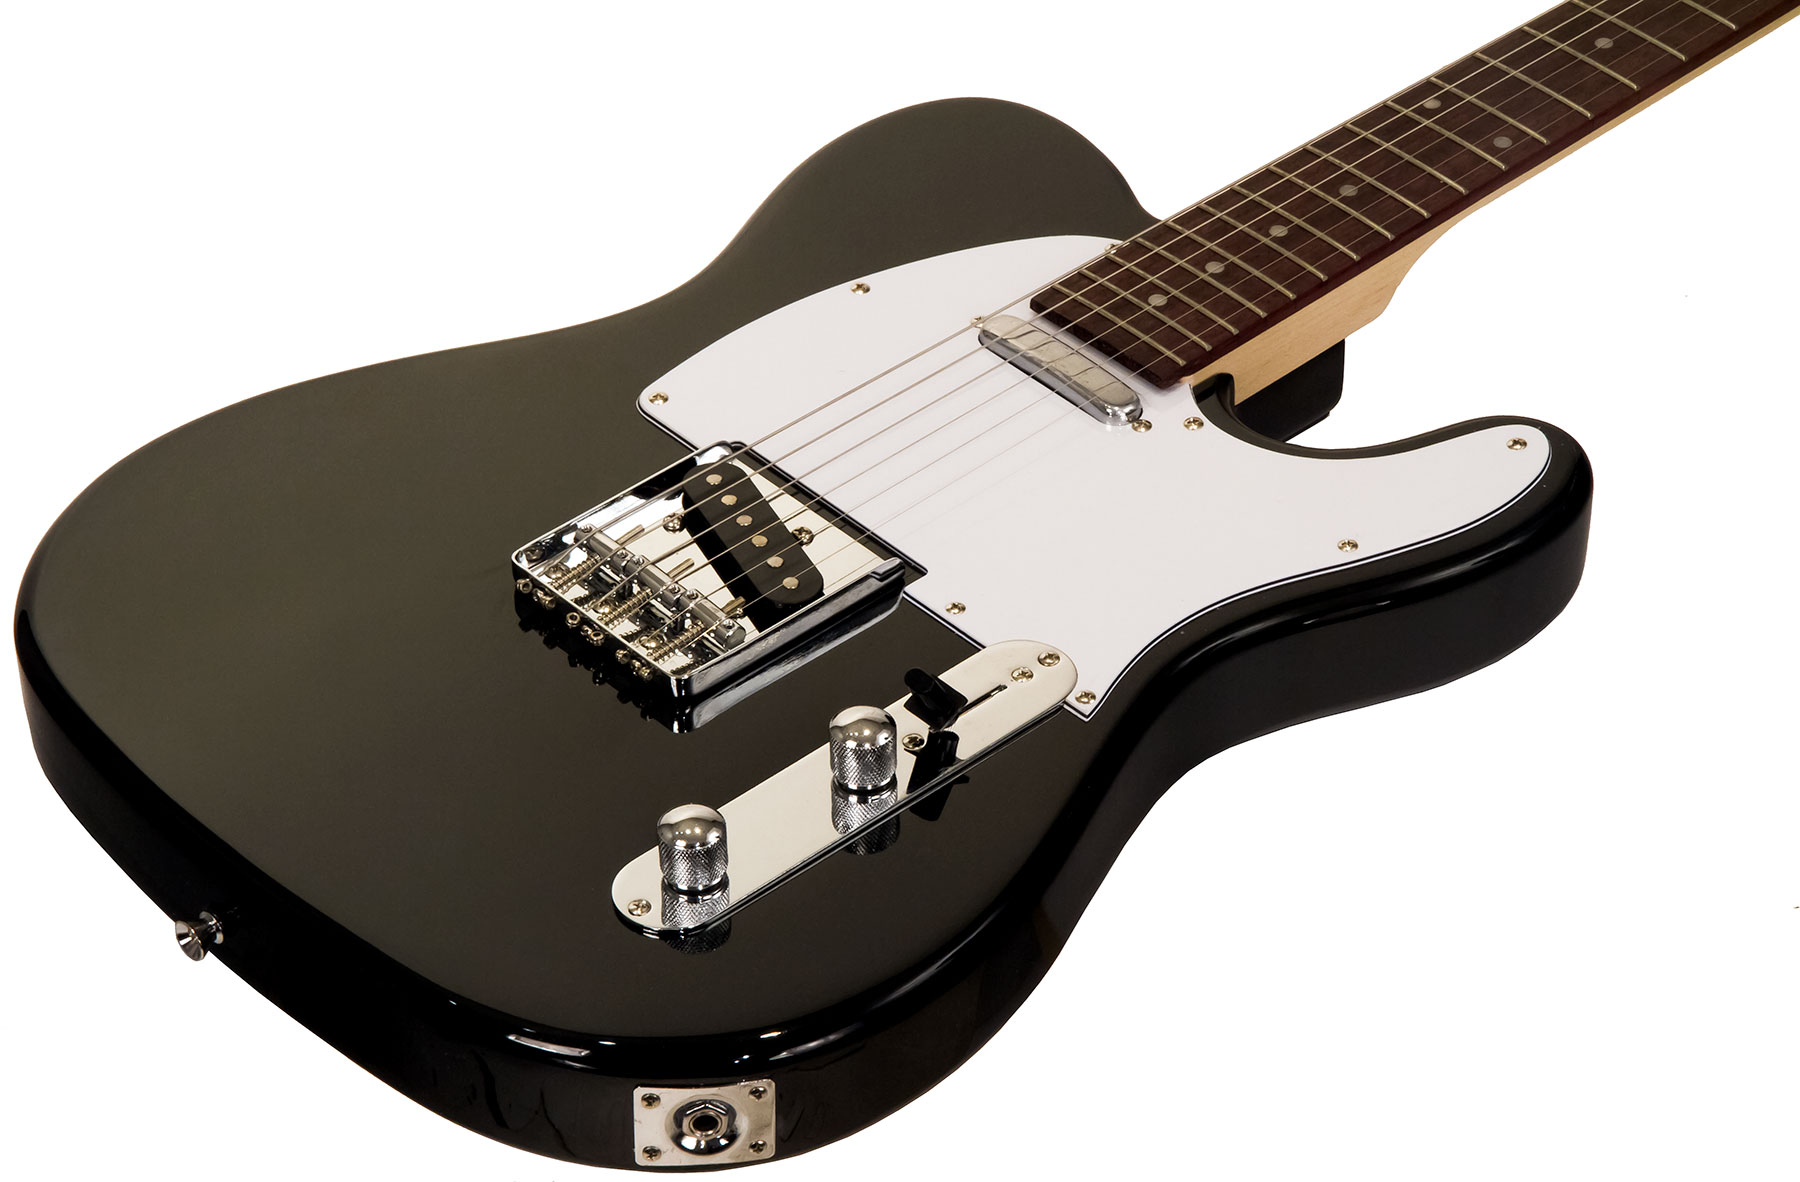 Eastone Tl70 +marshall Mg10g Combo 10 W +housse +courroie +cable +mediators - Black - E-Gitarre Set - Variation 1